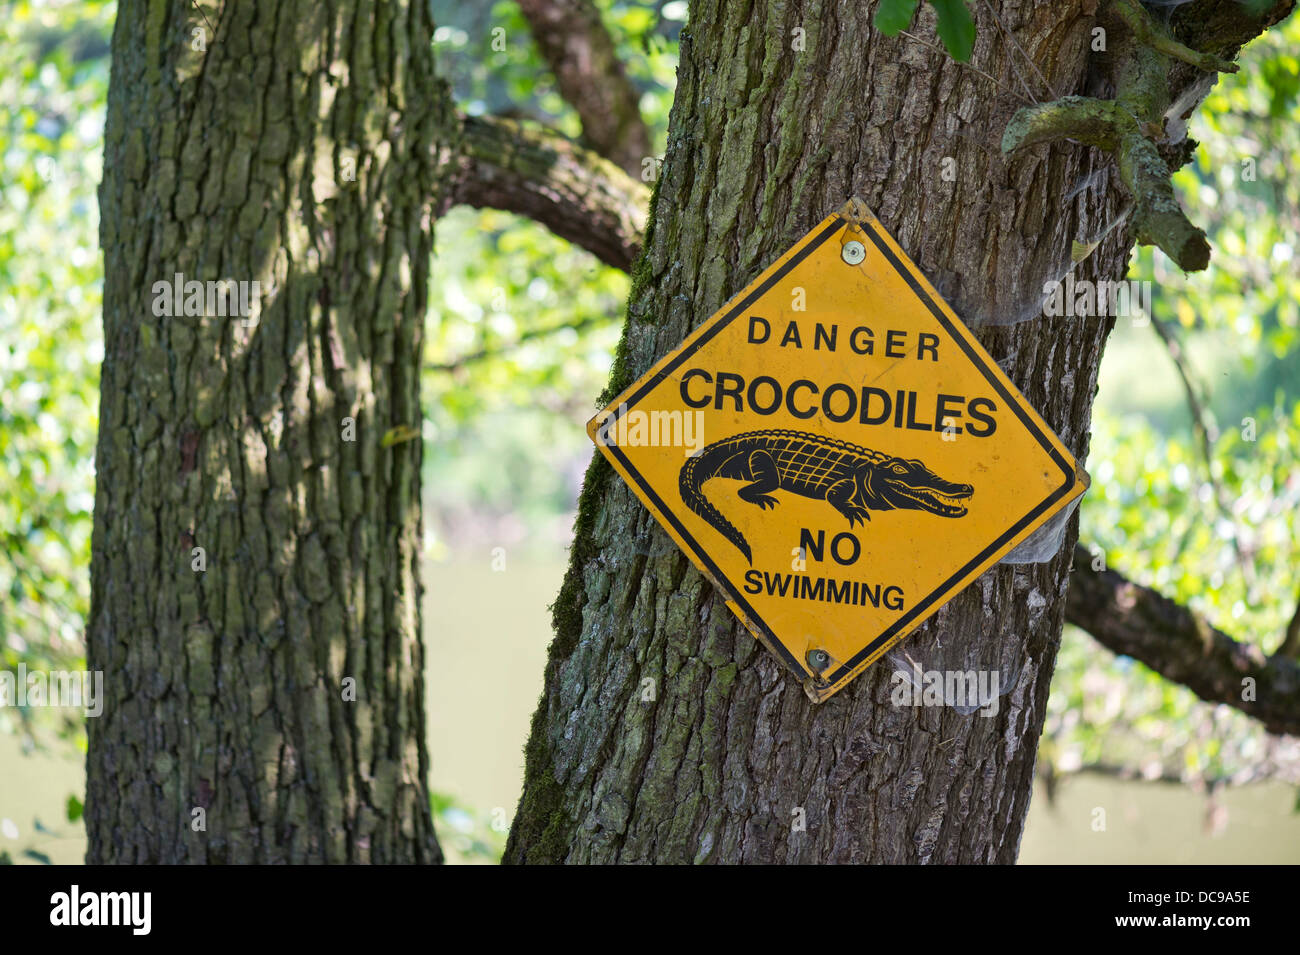 Warning sign 'Danger crocodiles No swimming' on a tree Stock Photo